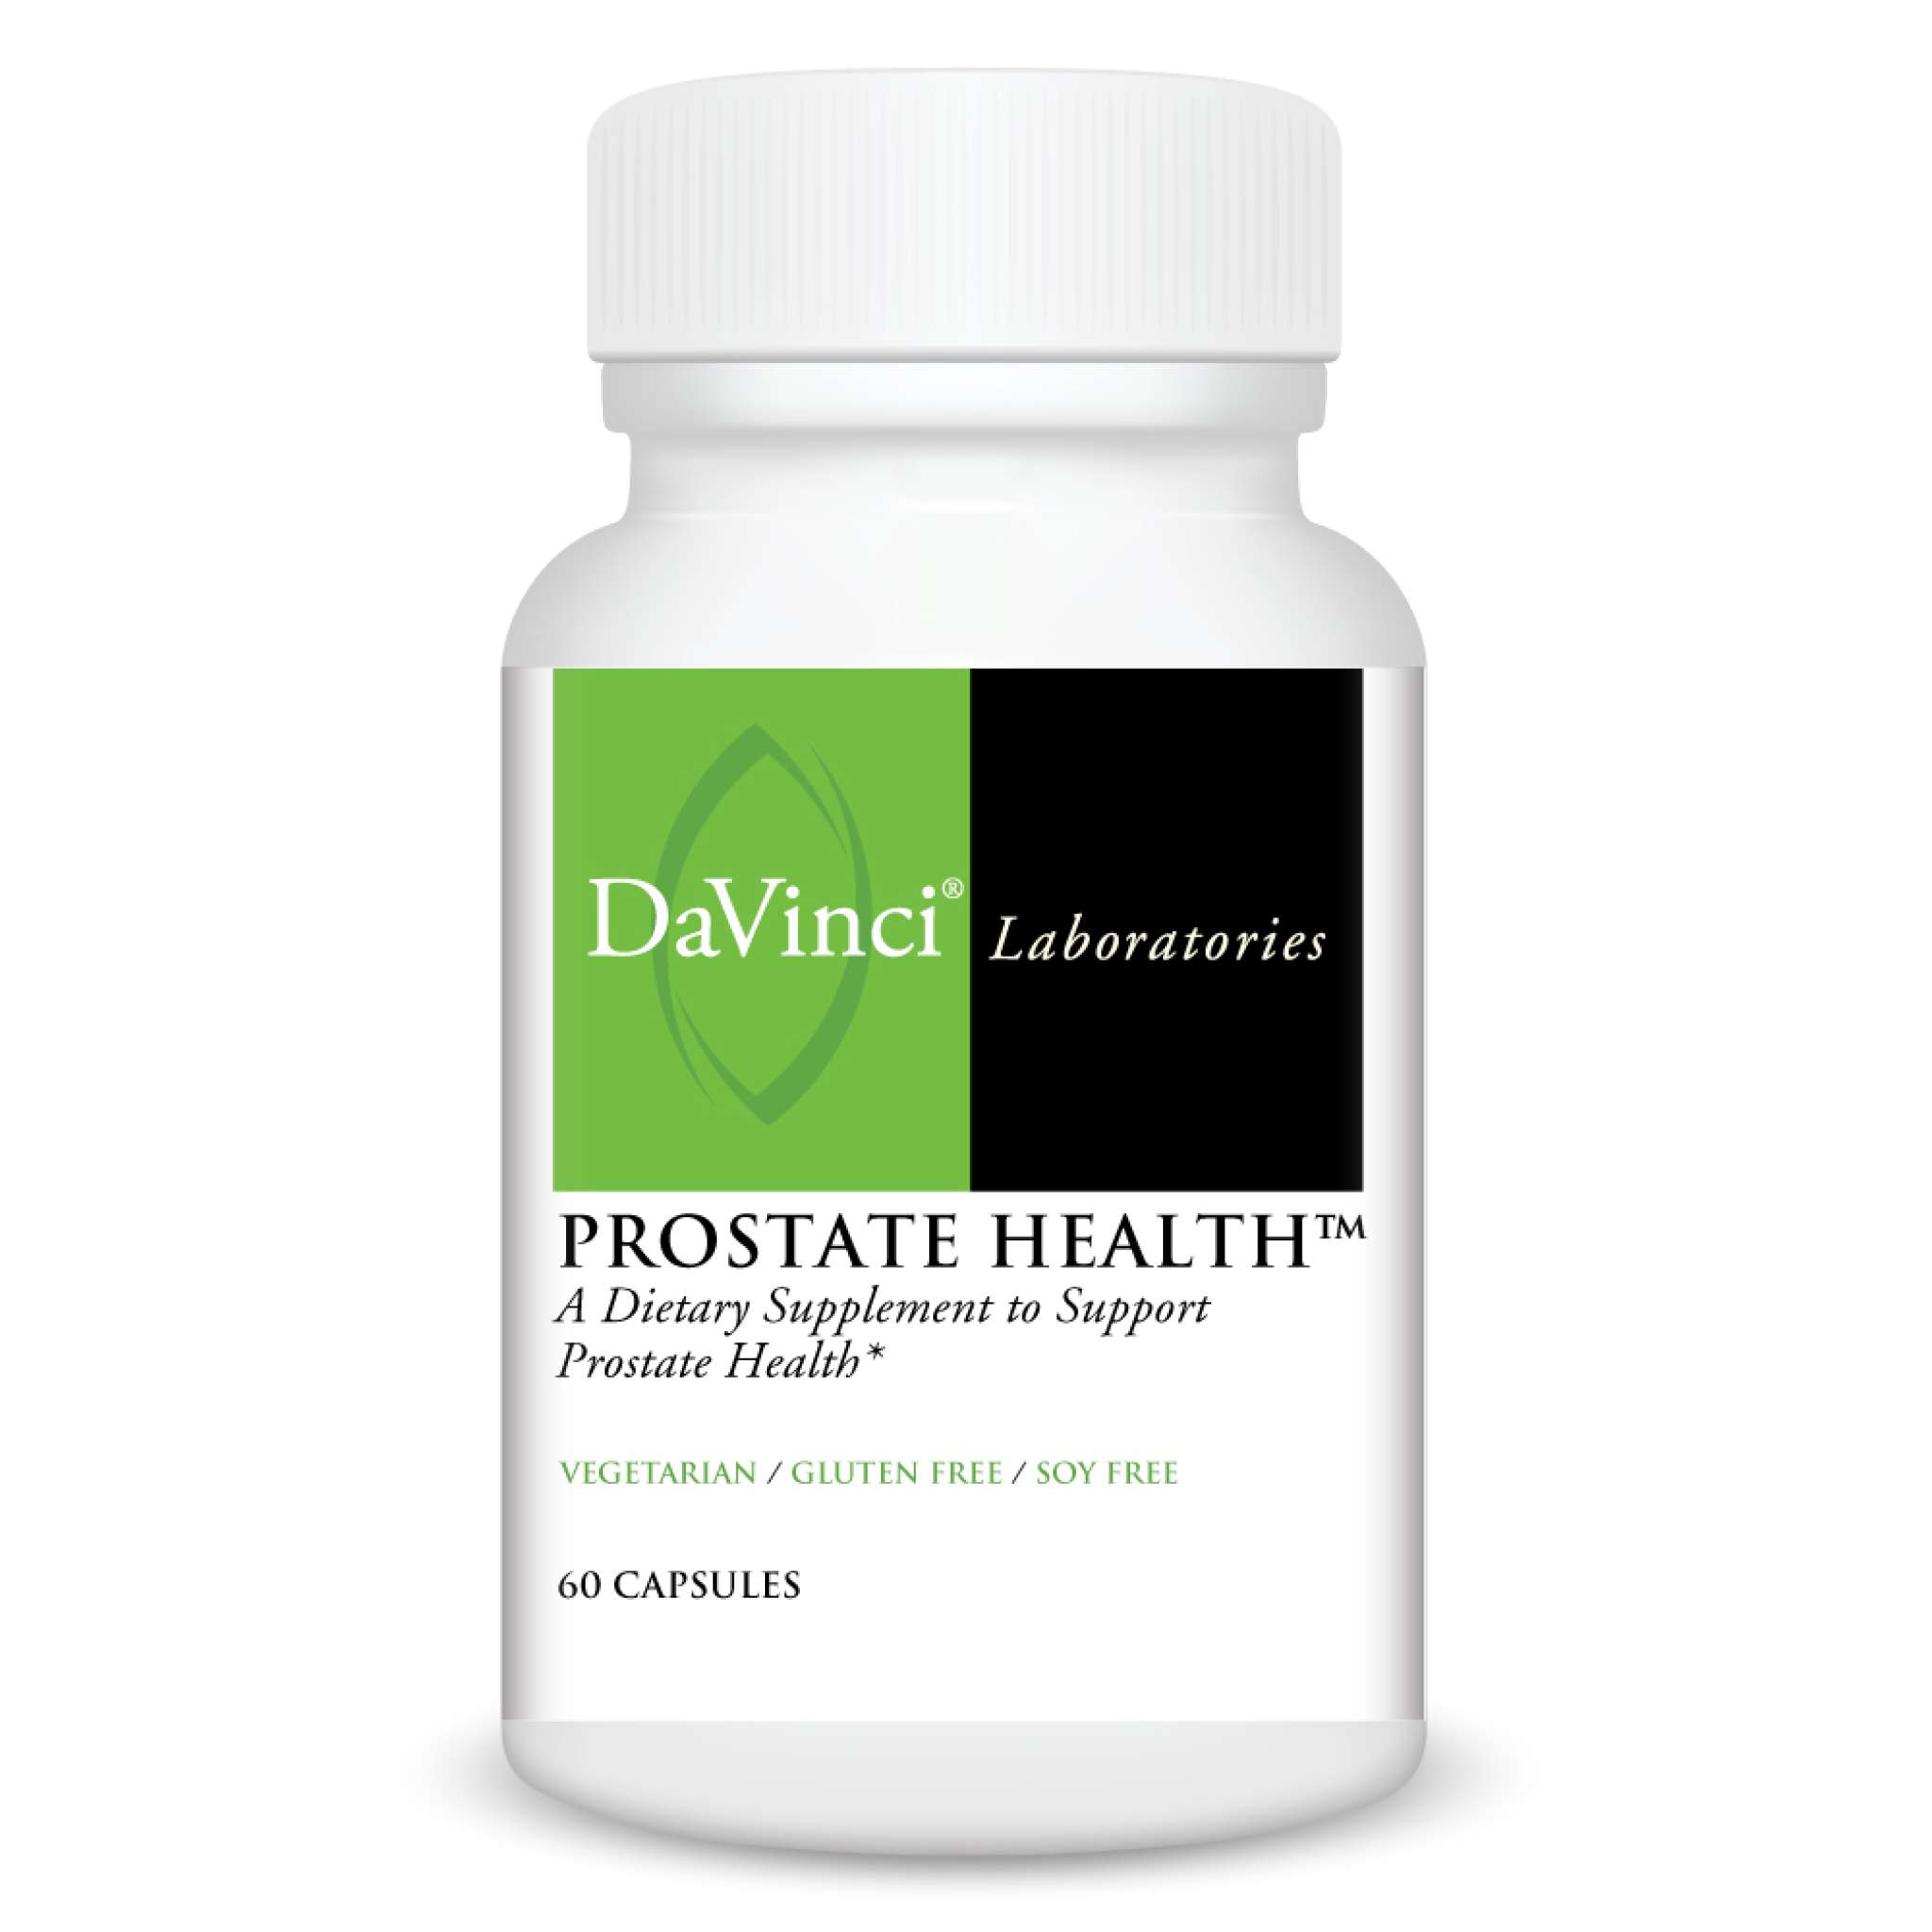 Davinci Laboratories - Prostate Health vCap